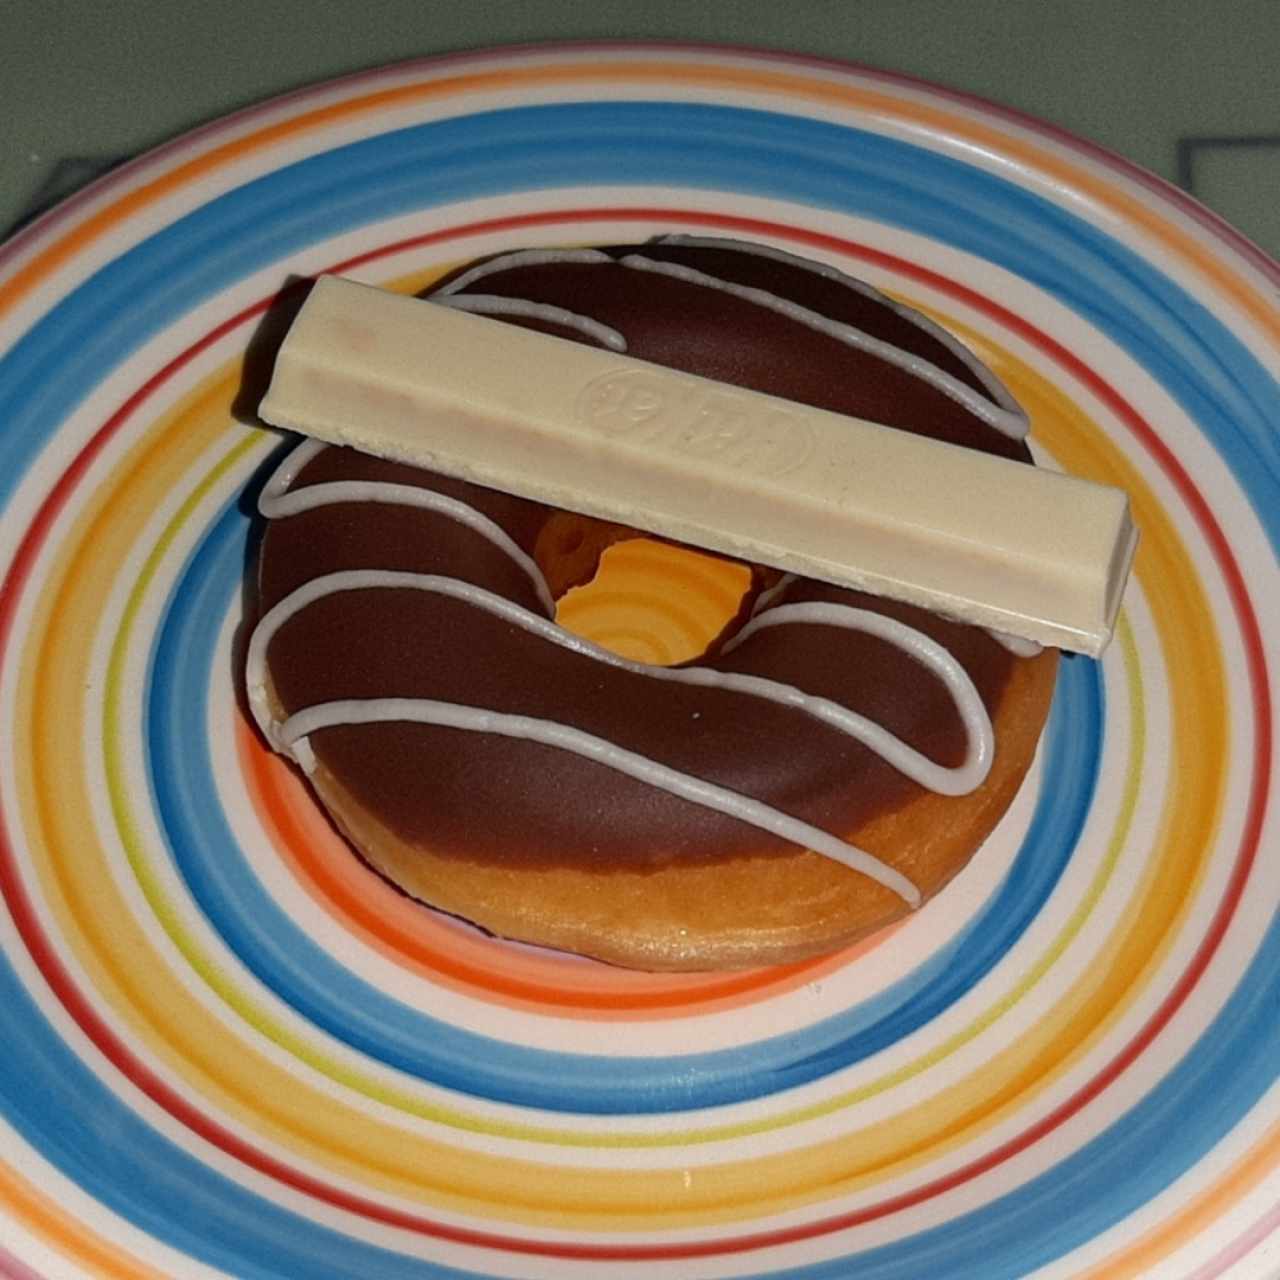 Donut de chocolate con kit kat blanco